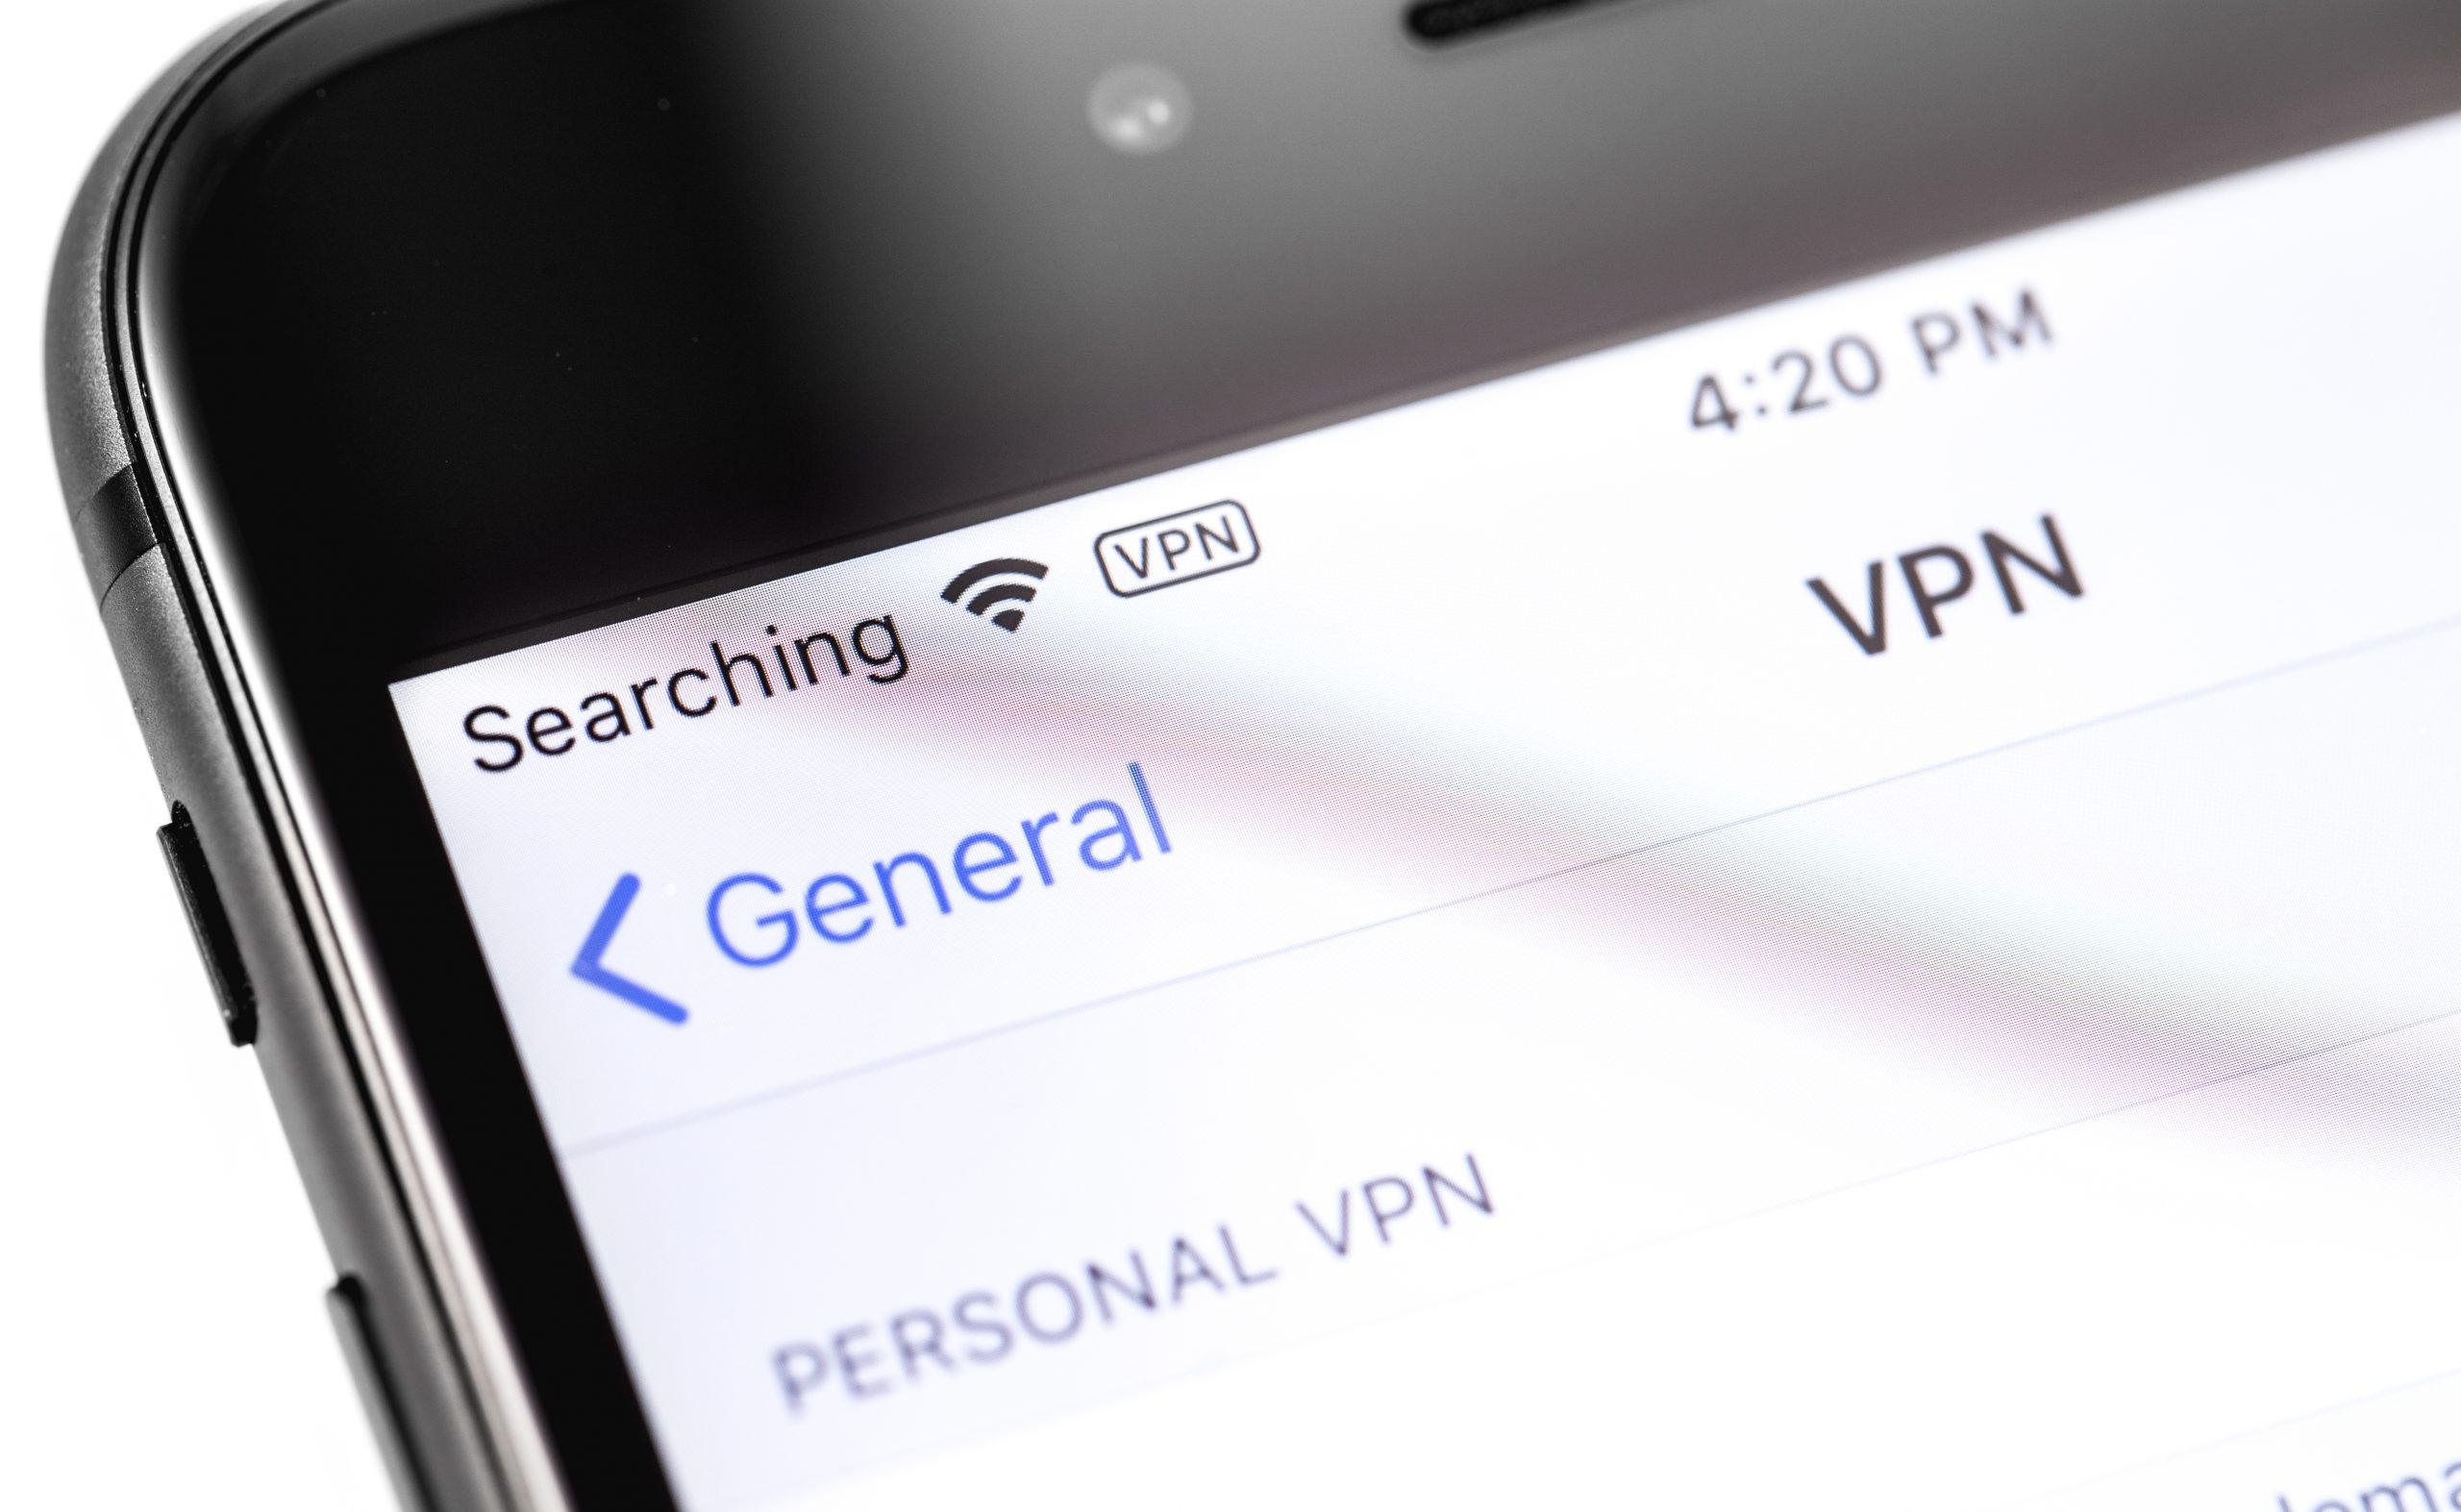 VPN settings on an iPhone